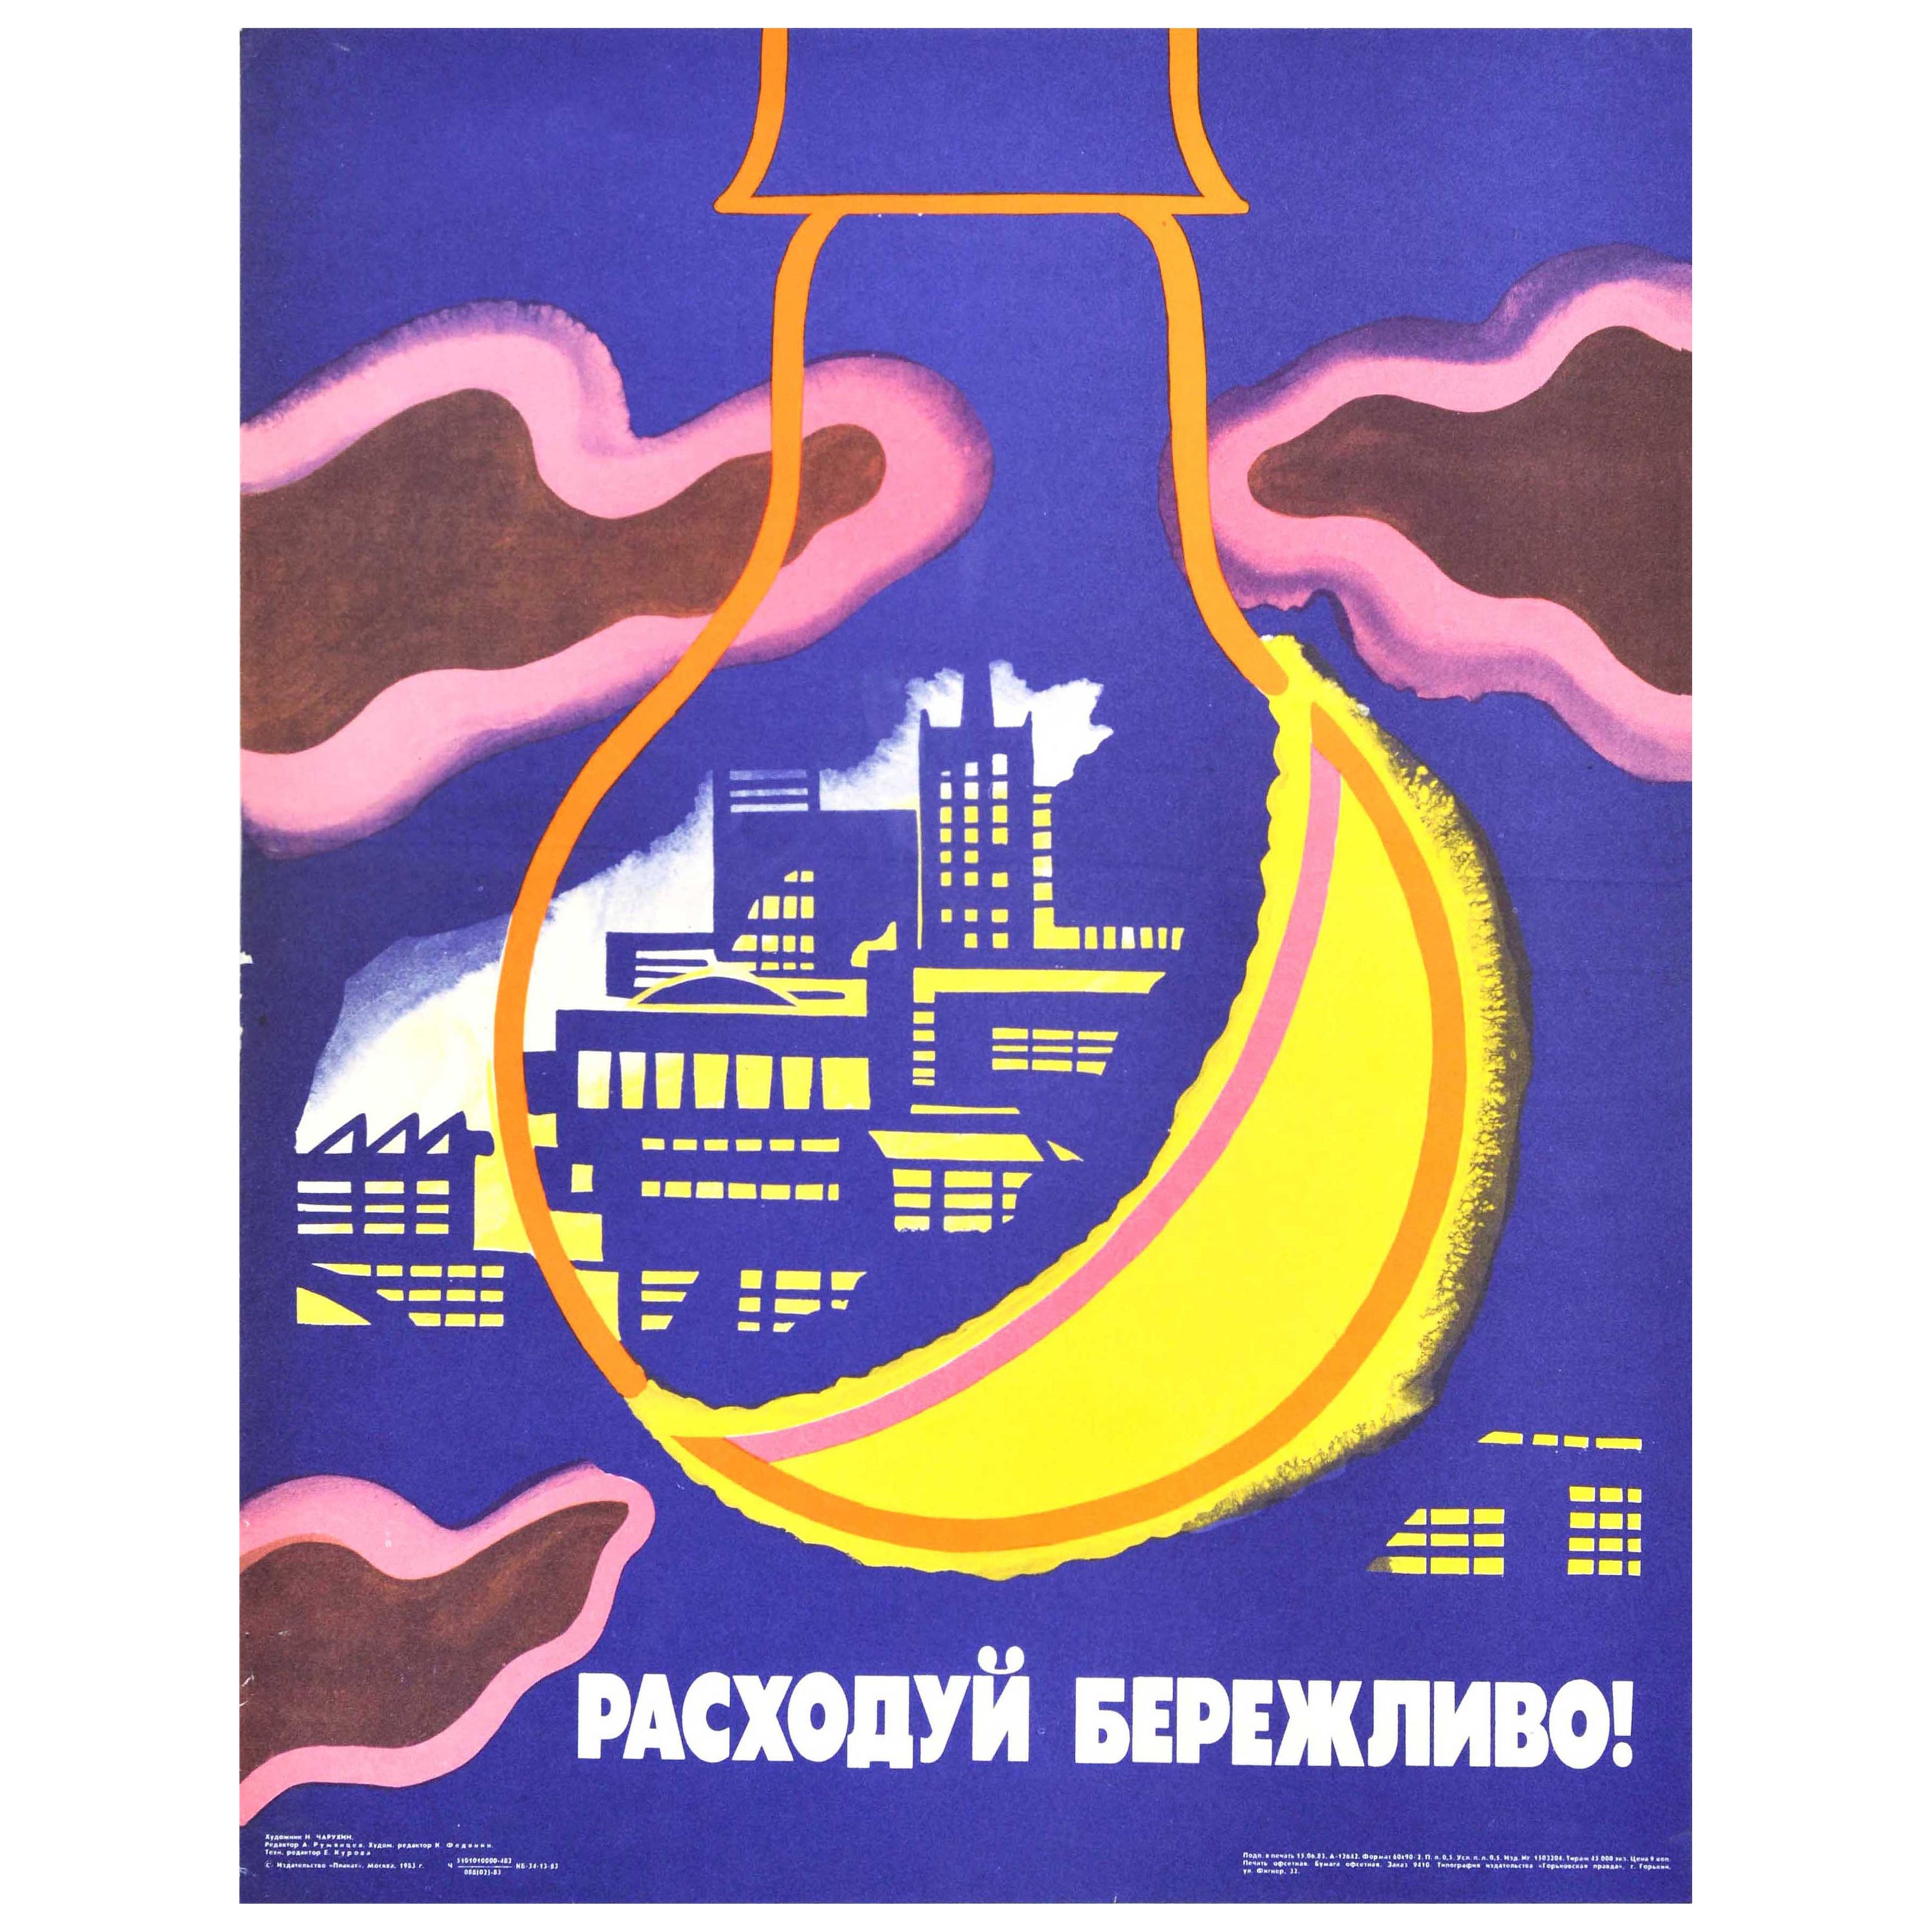 Original-Vintage-Poster Spend Wisely Save Energie Electricity Stadtleuchten Design